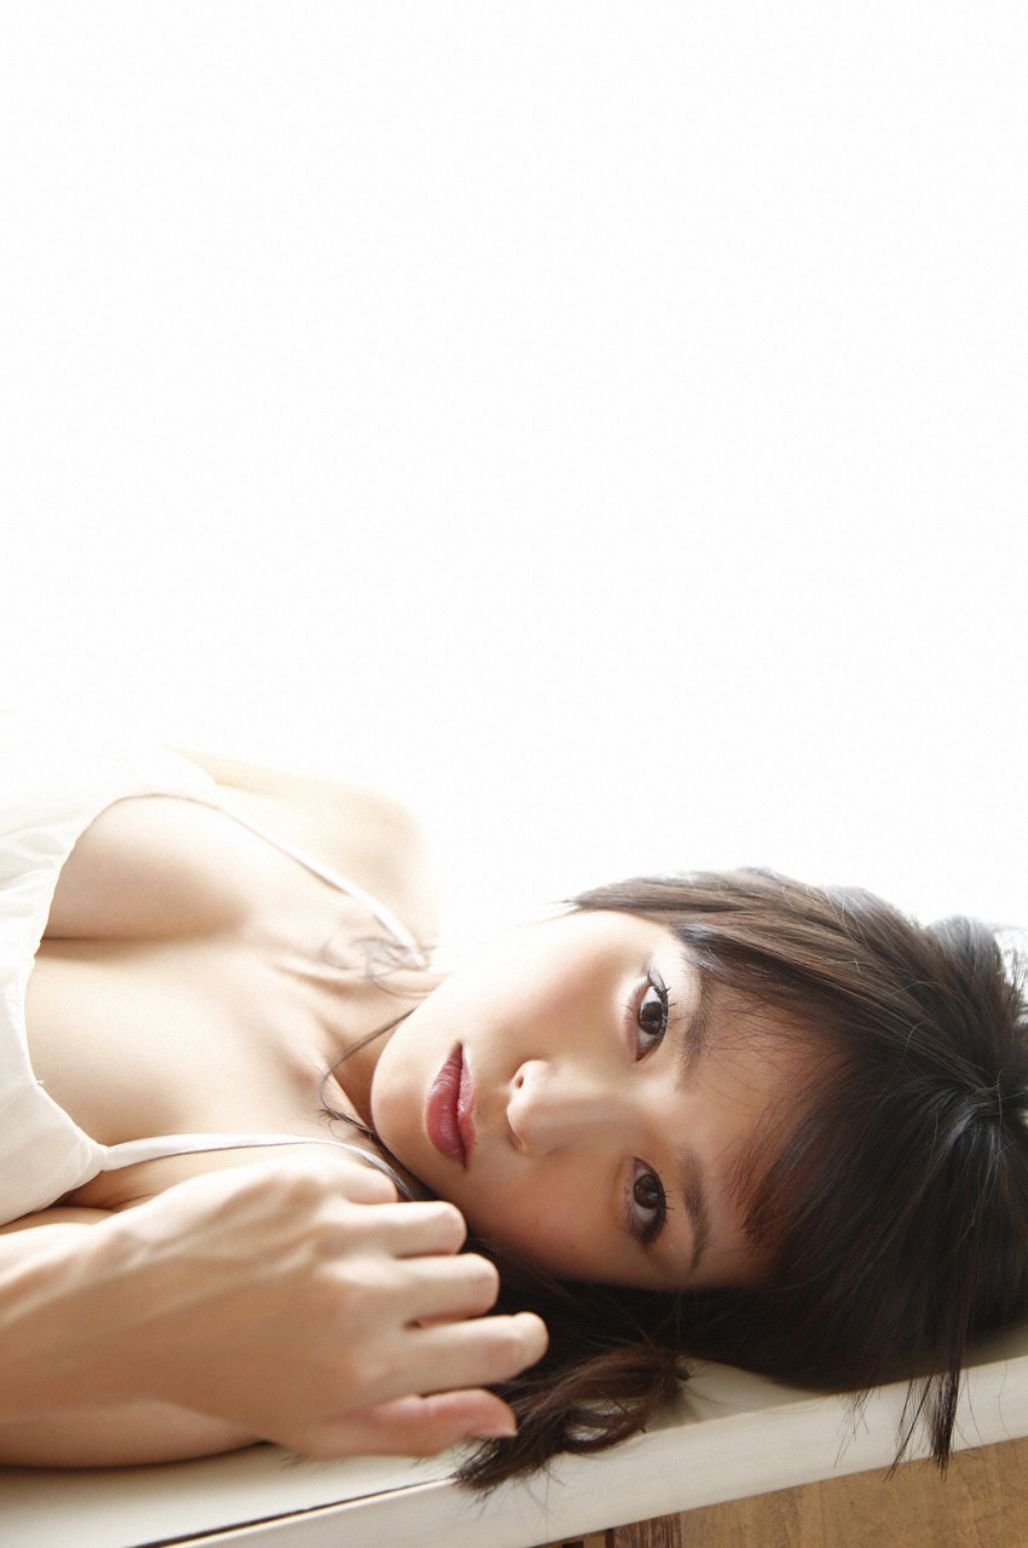 Image-Japanese-Gravure-Idol-Mio-Otani-Photos-Purity-Miss-Magazine-TruePic.net- Picture-62